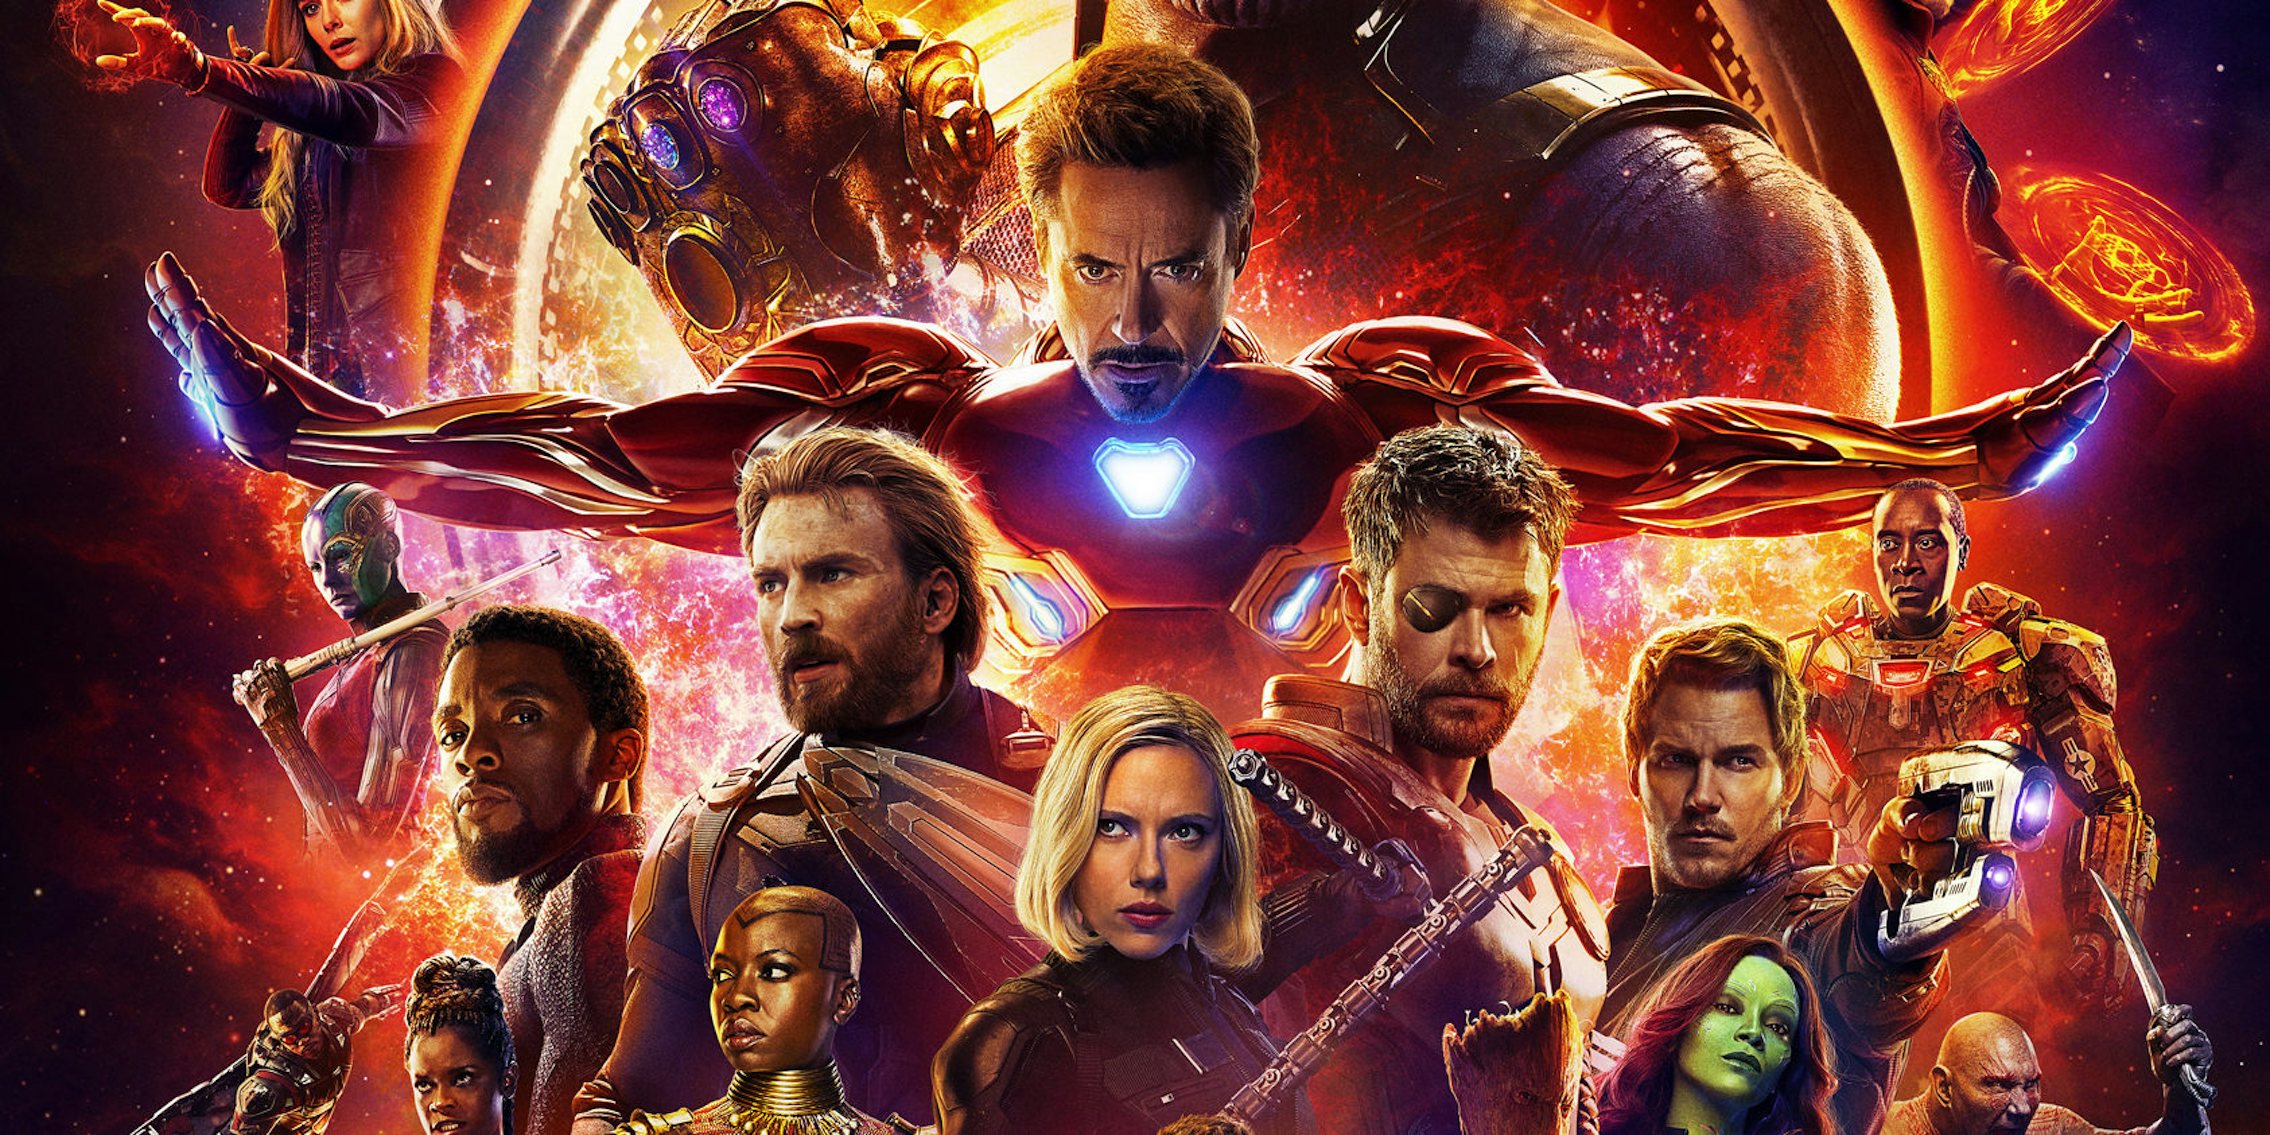 'Avengers: Infinity War' Has Pre-Sold $200 Million in Tickets